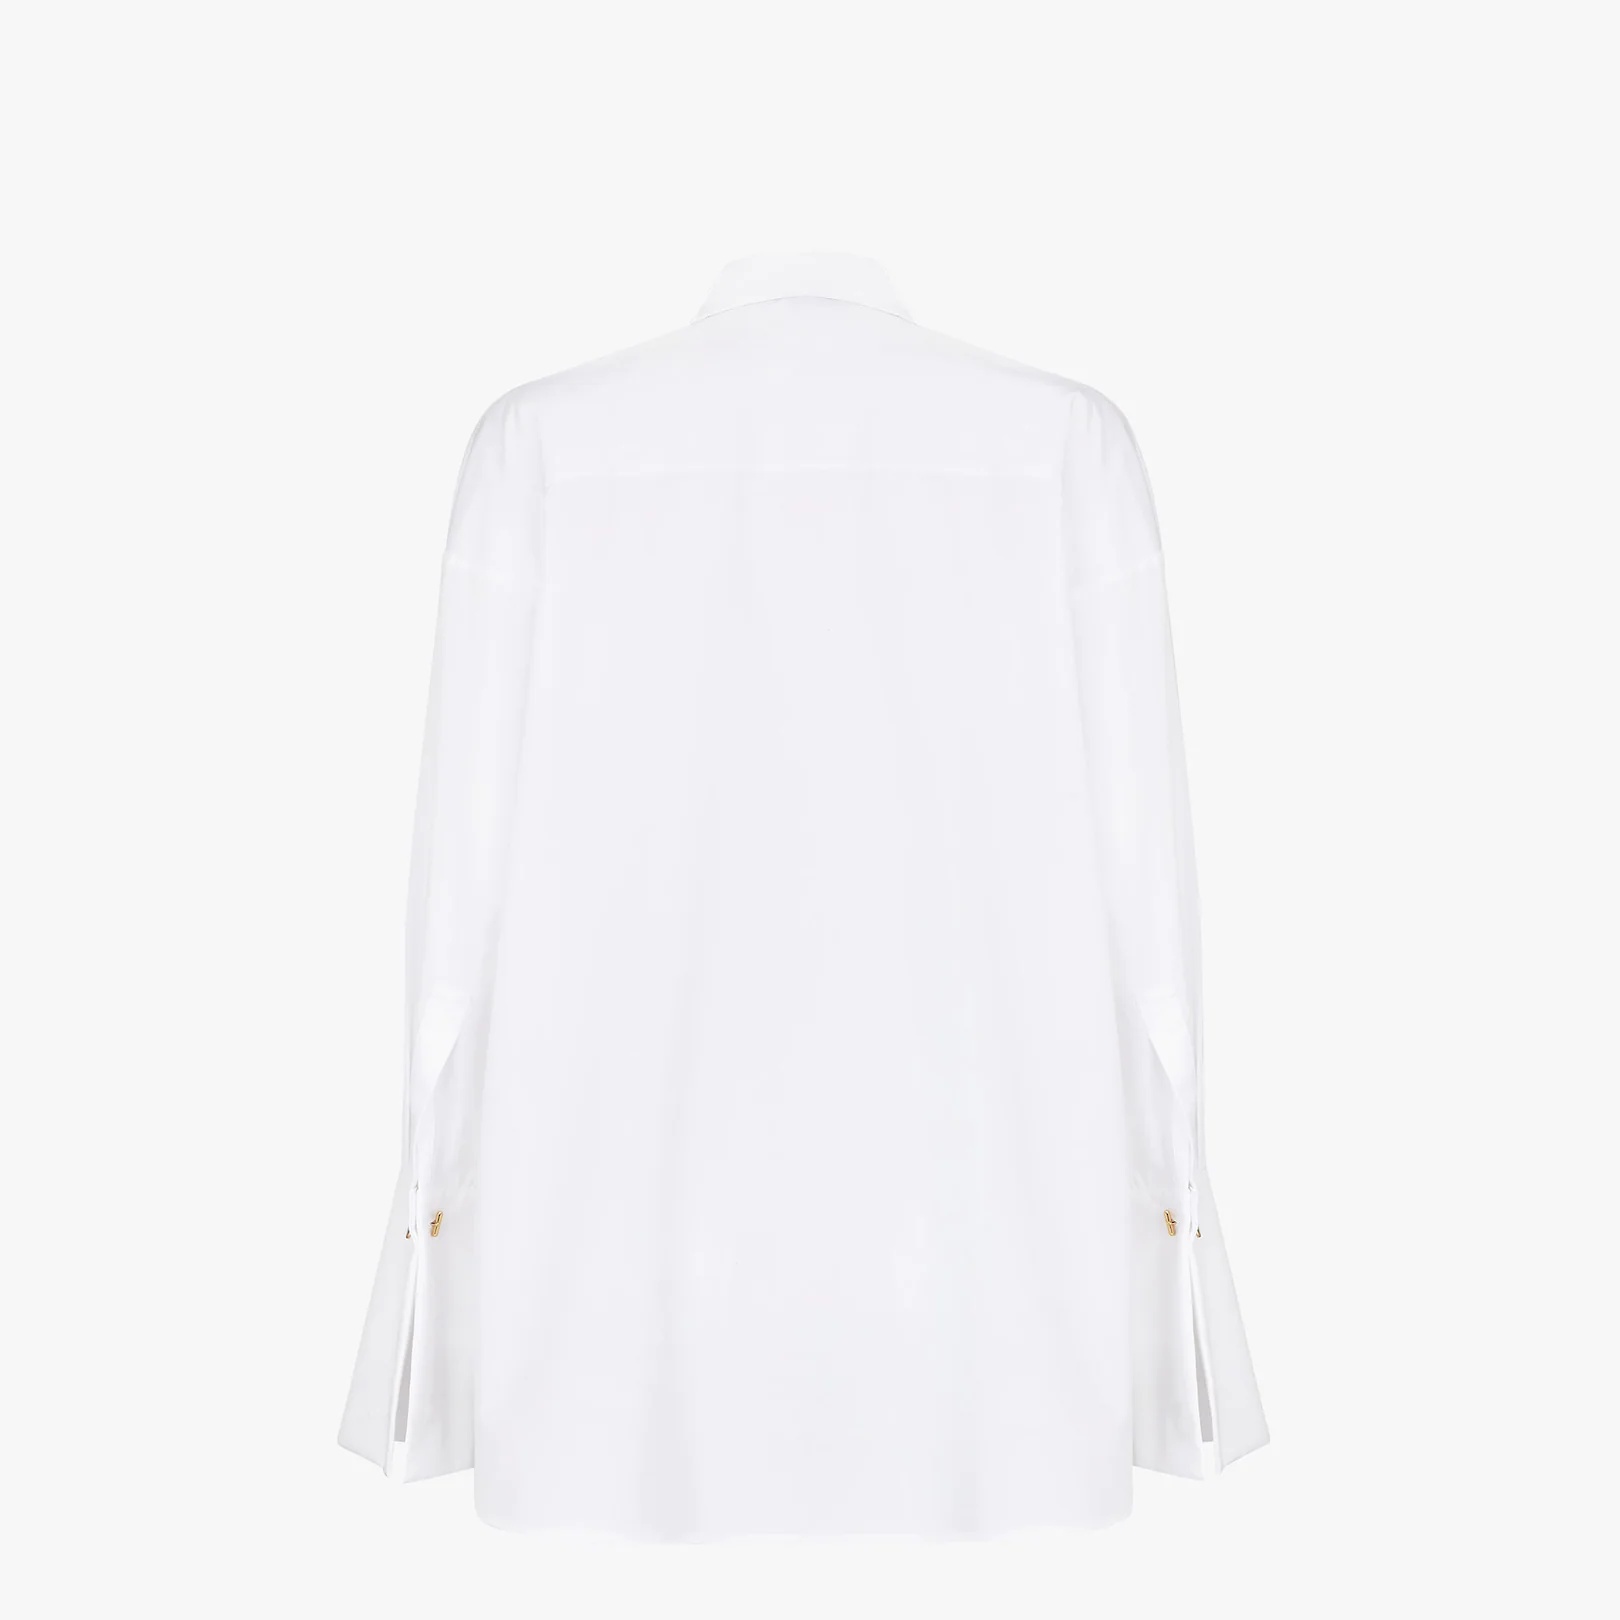 White cotton shirt - 2